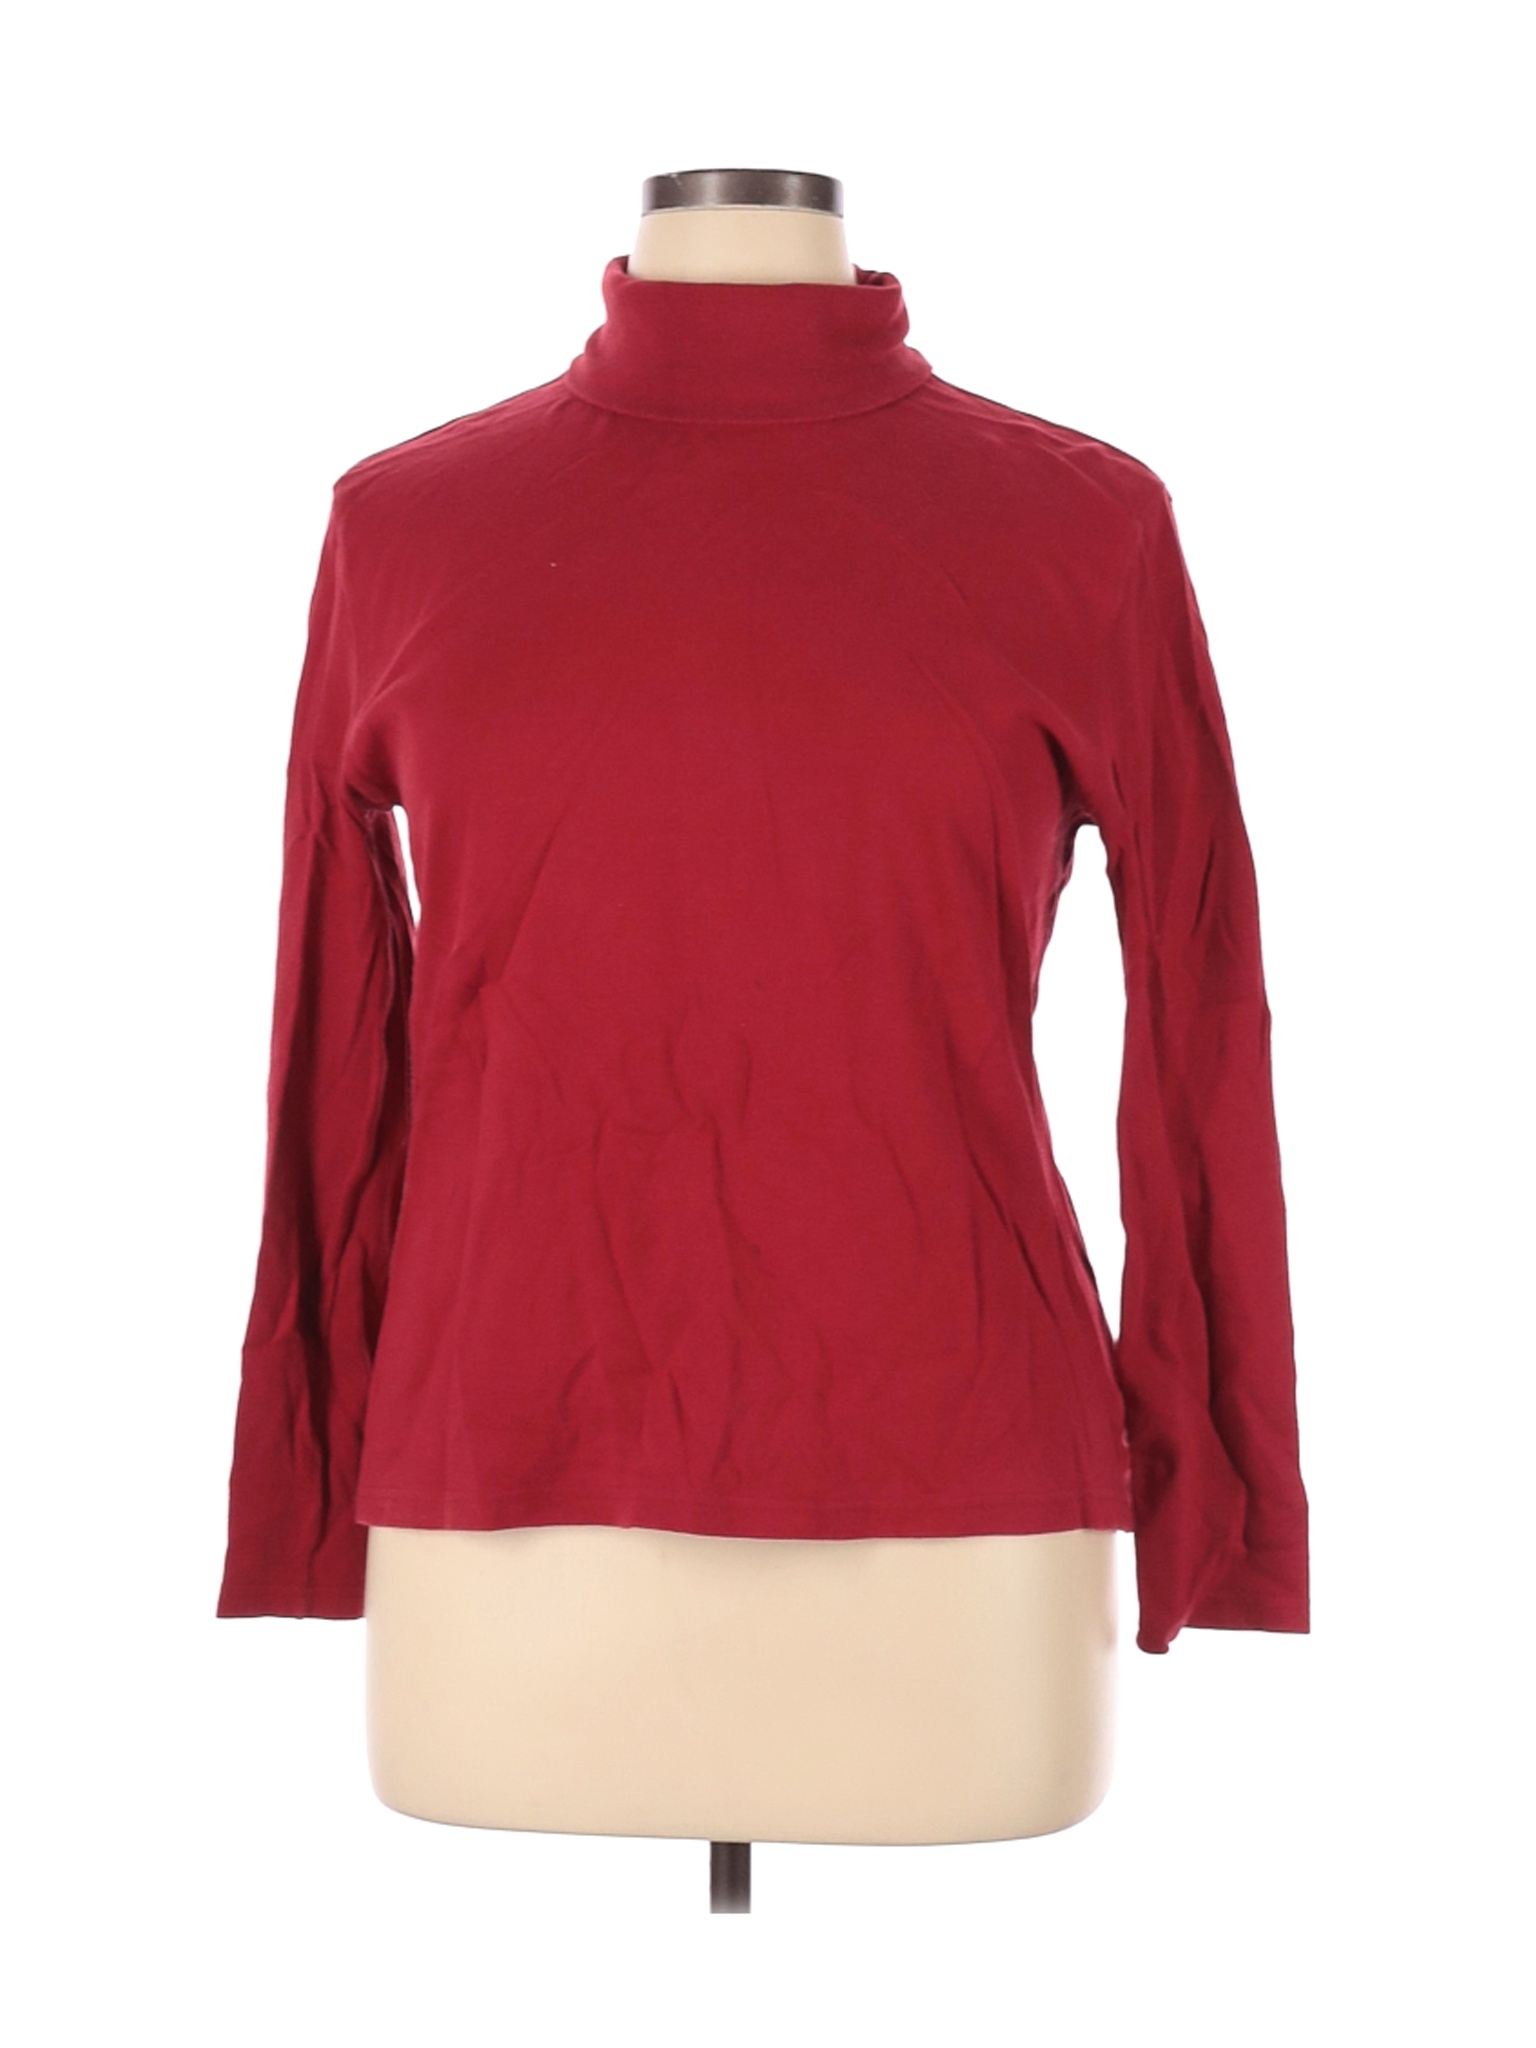 Basic Editions Women Red Long Sleeve Turtleneck XL | eBay